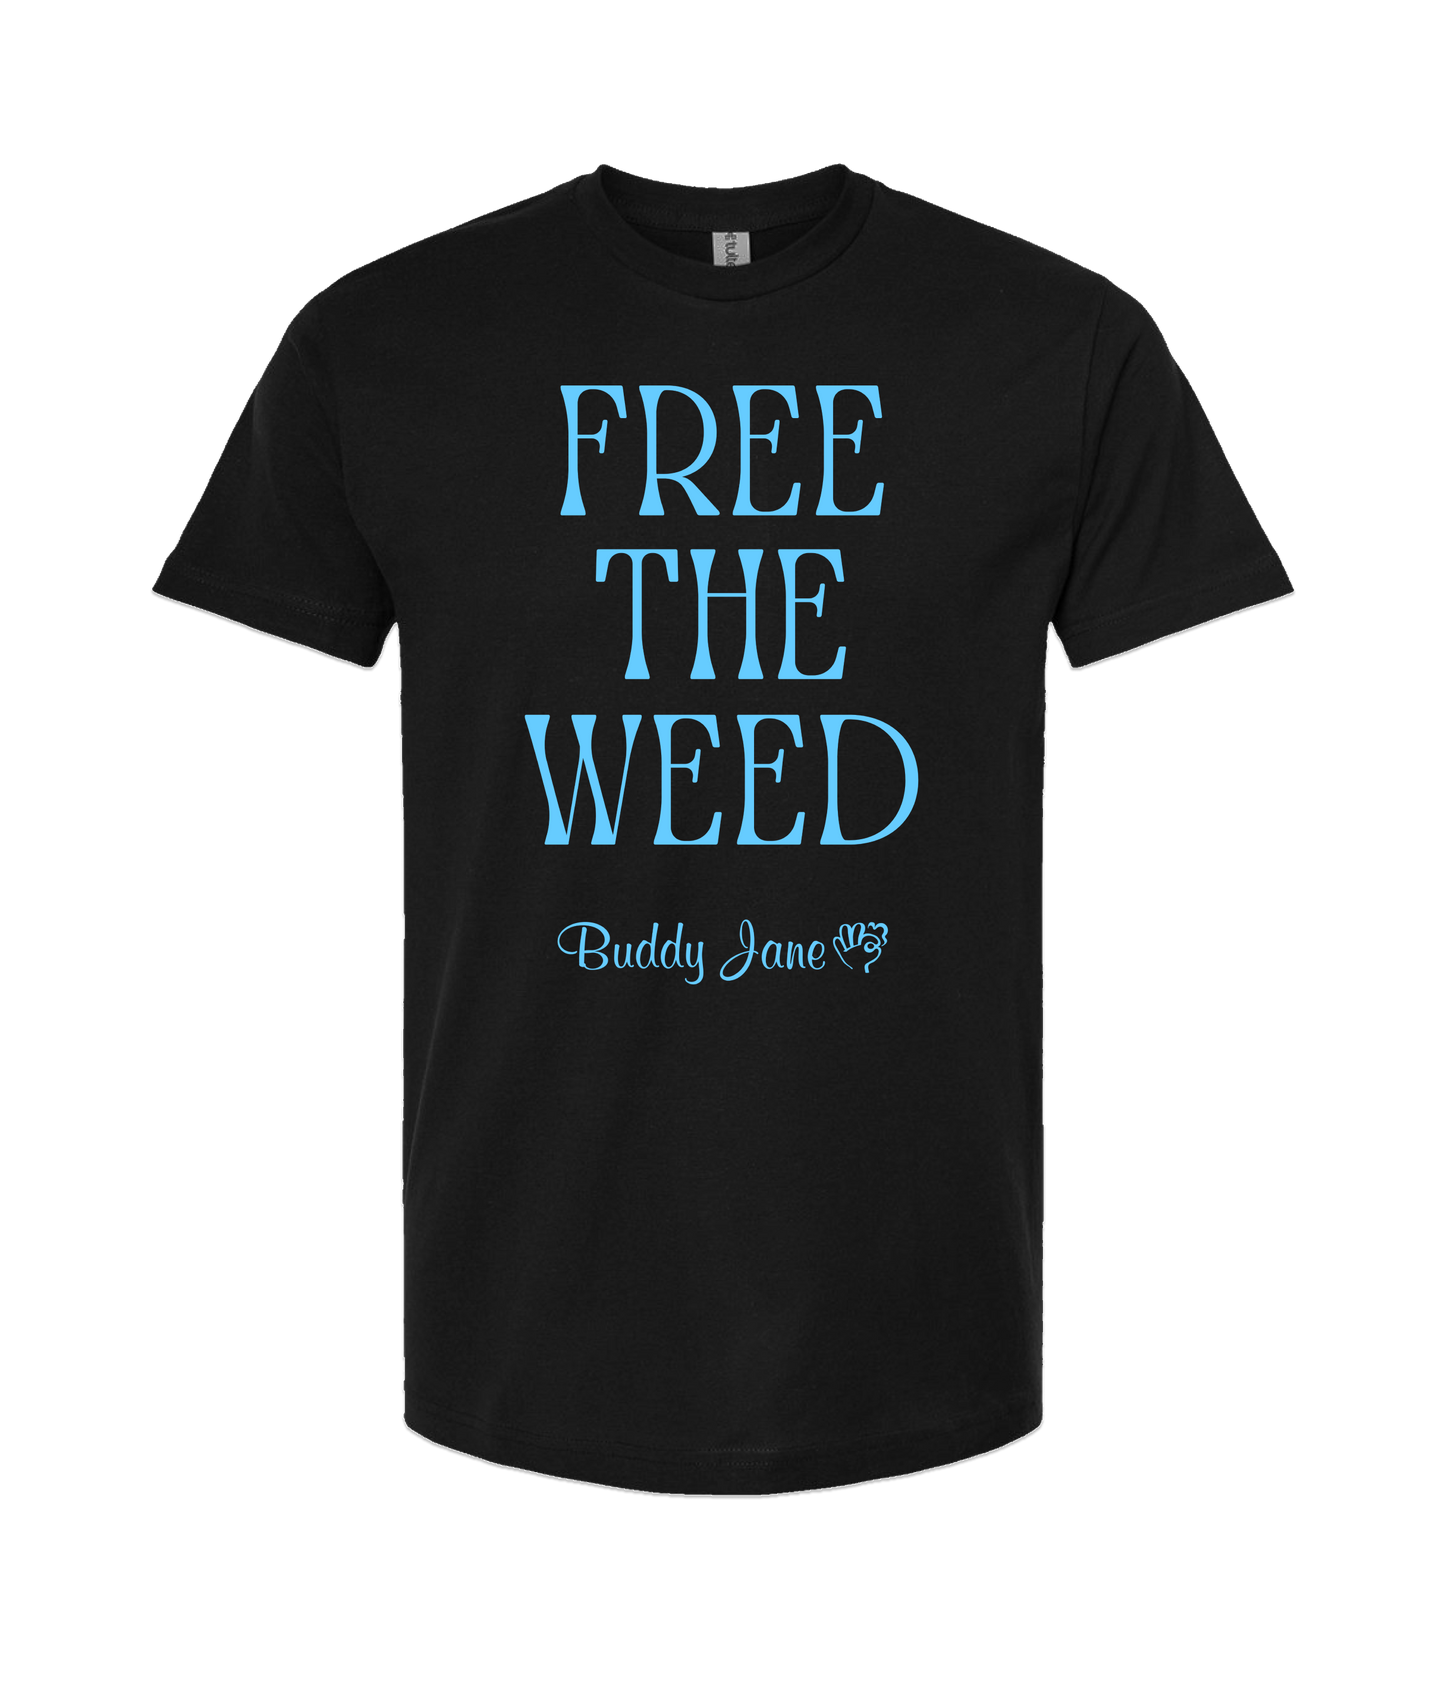 Buddy Jane - FREE THE WEED - Black T-Shirt